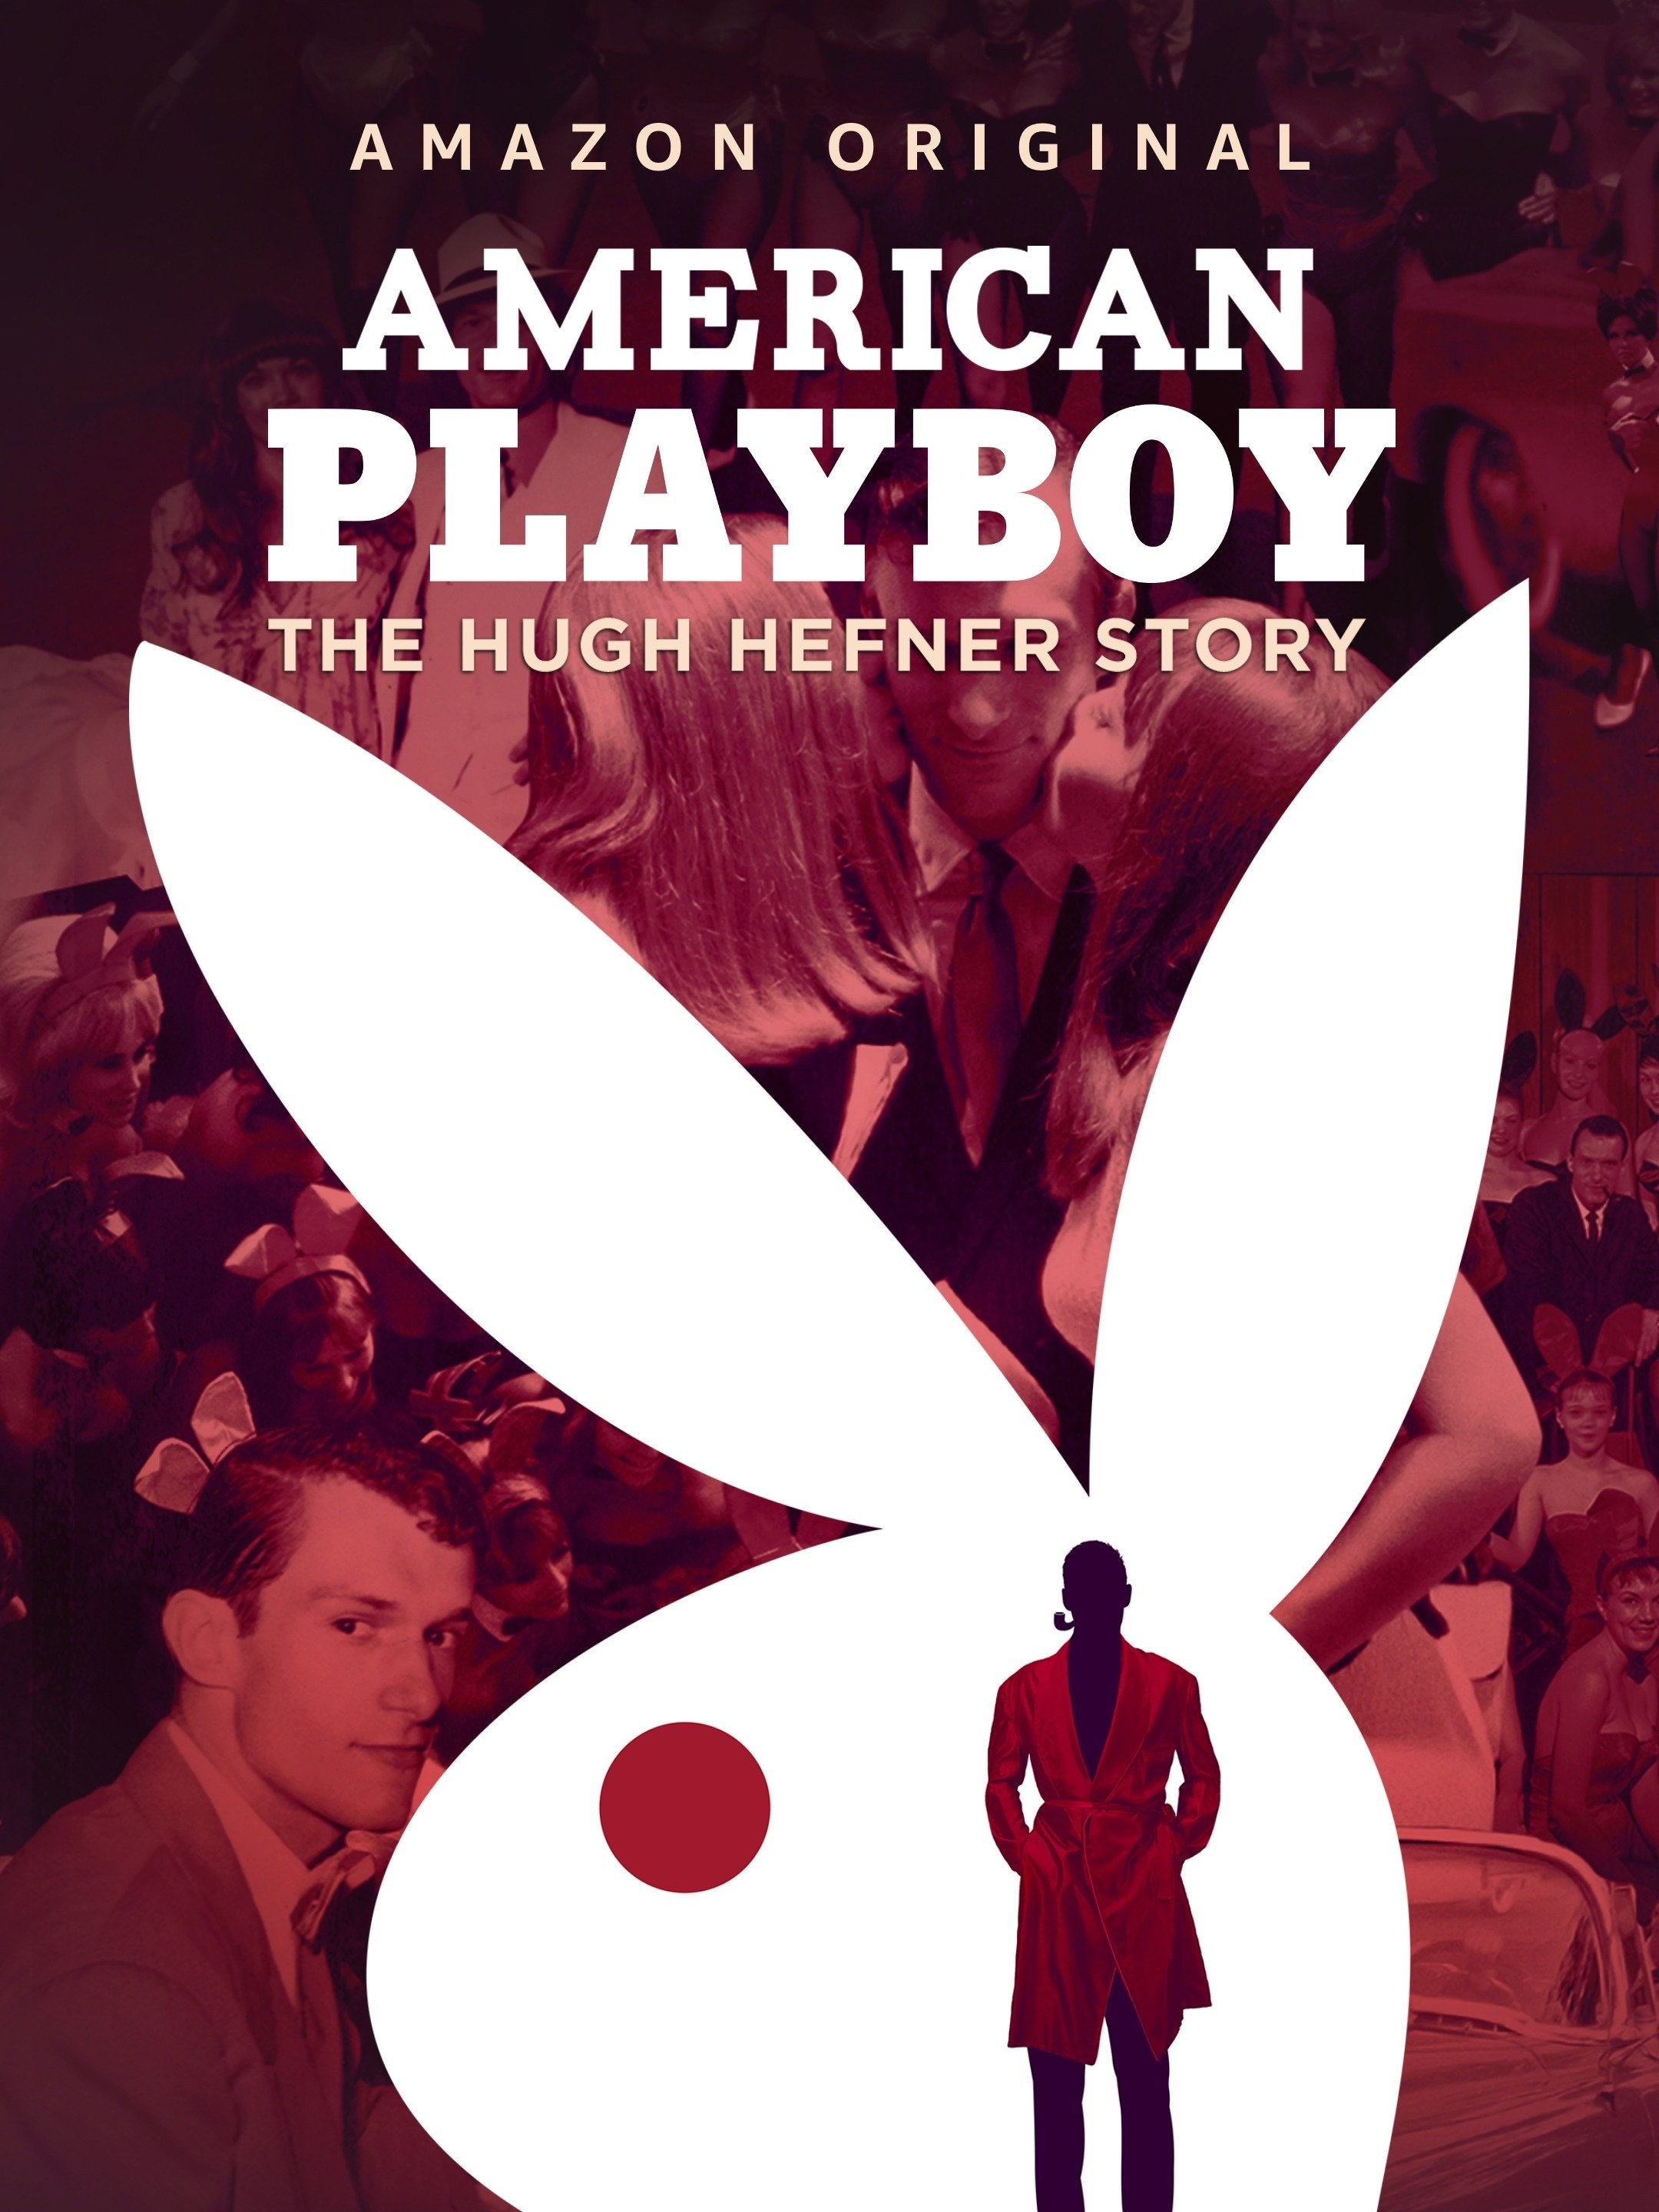 American playboy the hugh hefner story review